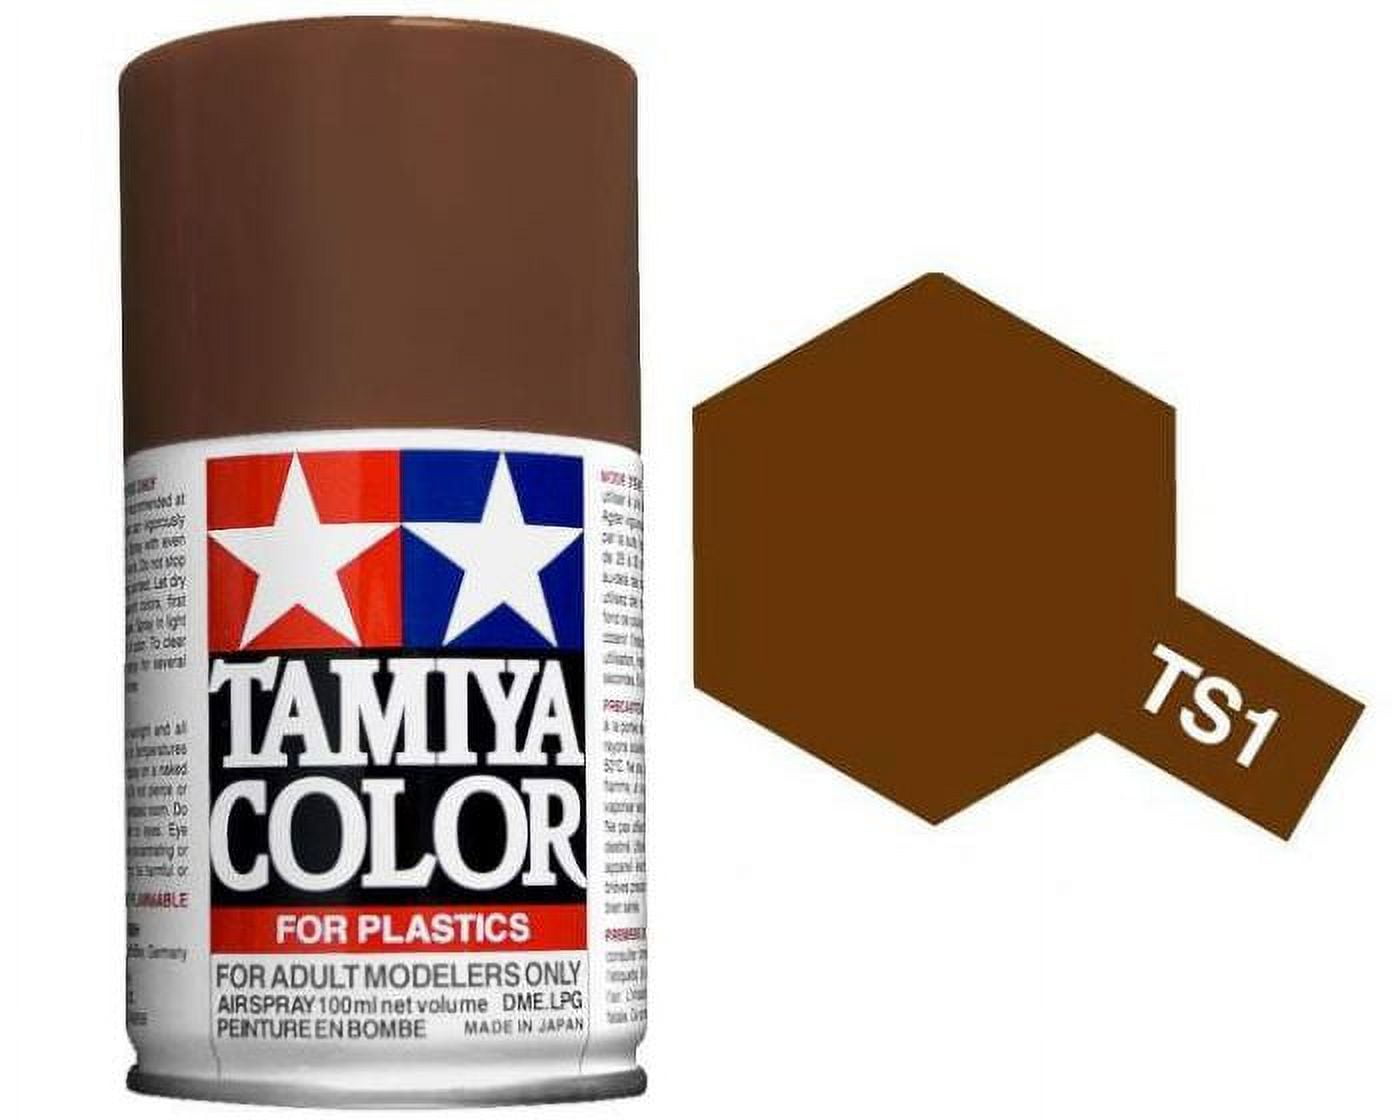 Bombe de peinture TS 100 ml Tamiya